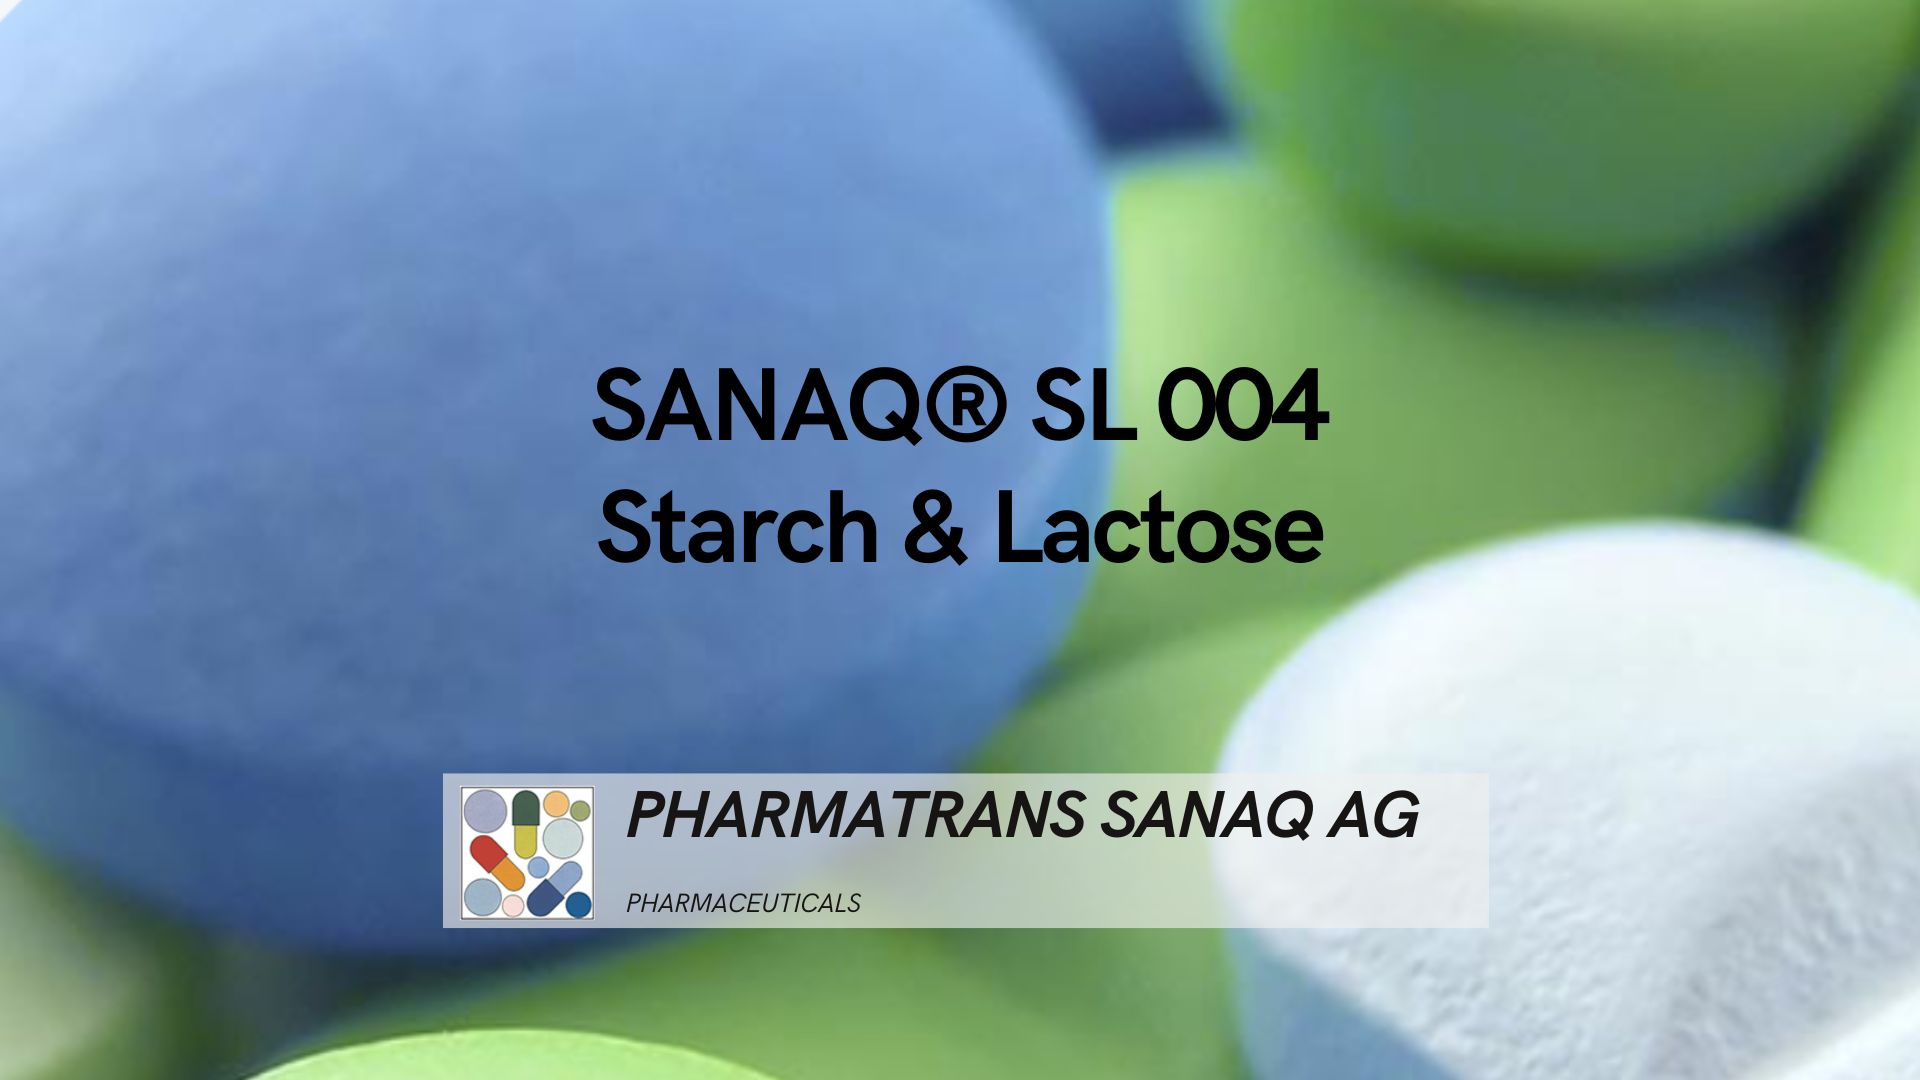 Pharmatrans Sanaq AG_SANAQ SL 004